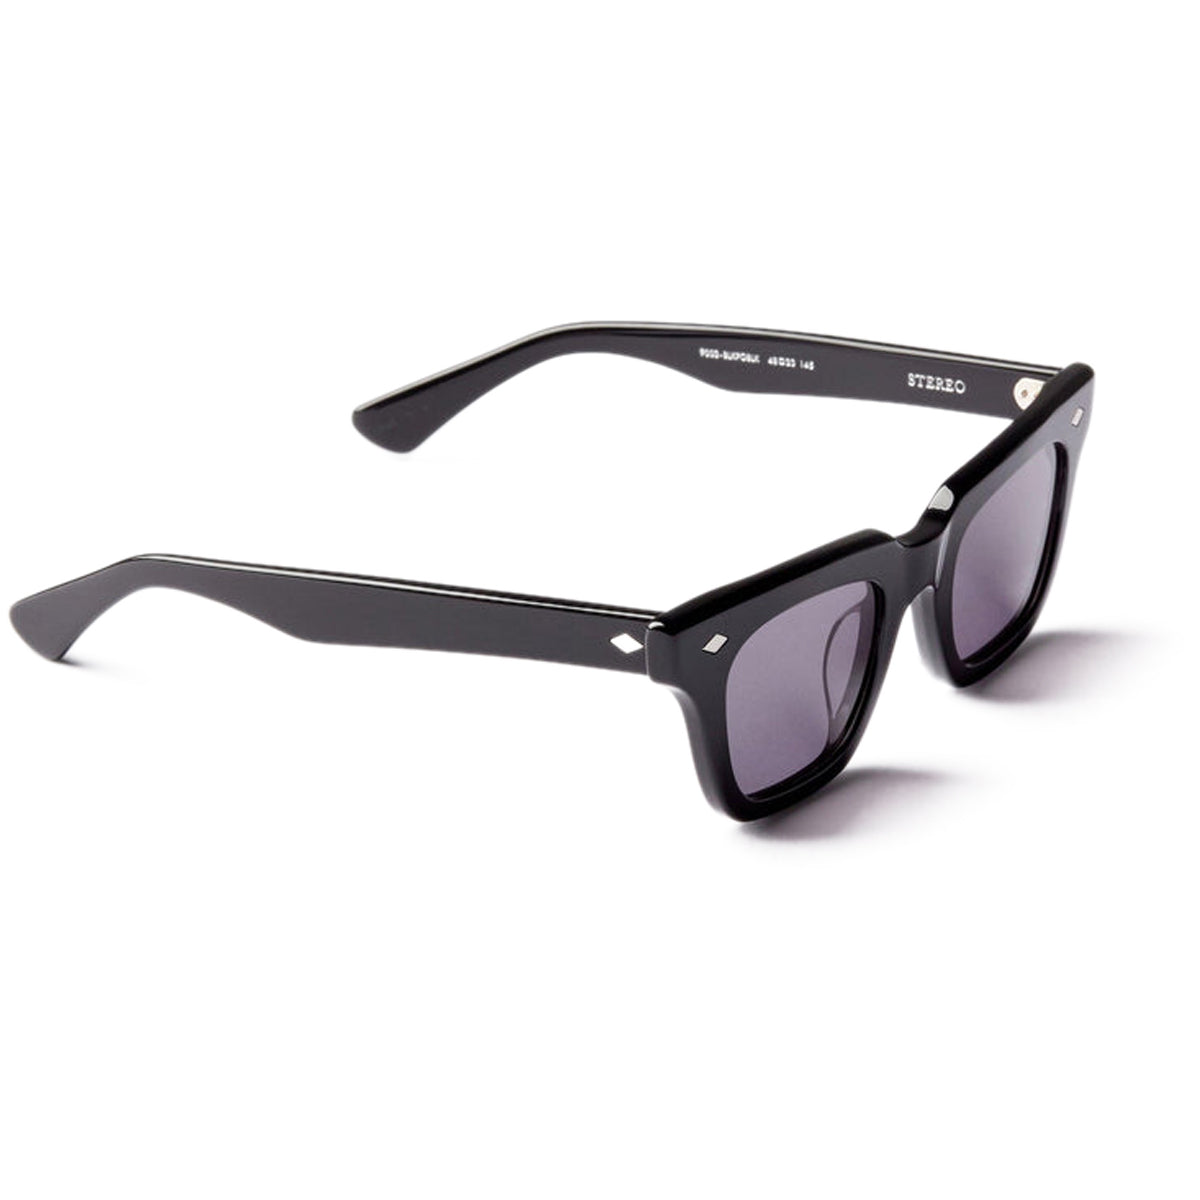 Epokhe Stereo Sunglasses - Black Polished/Black image 1